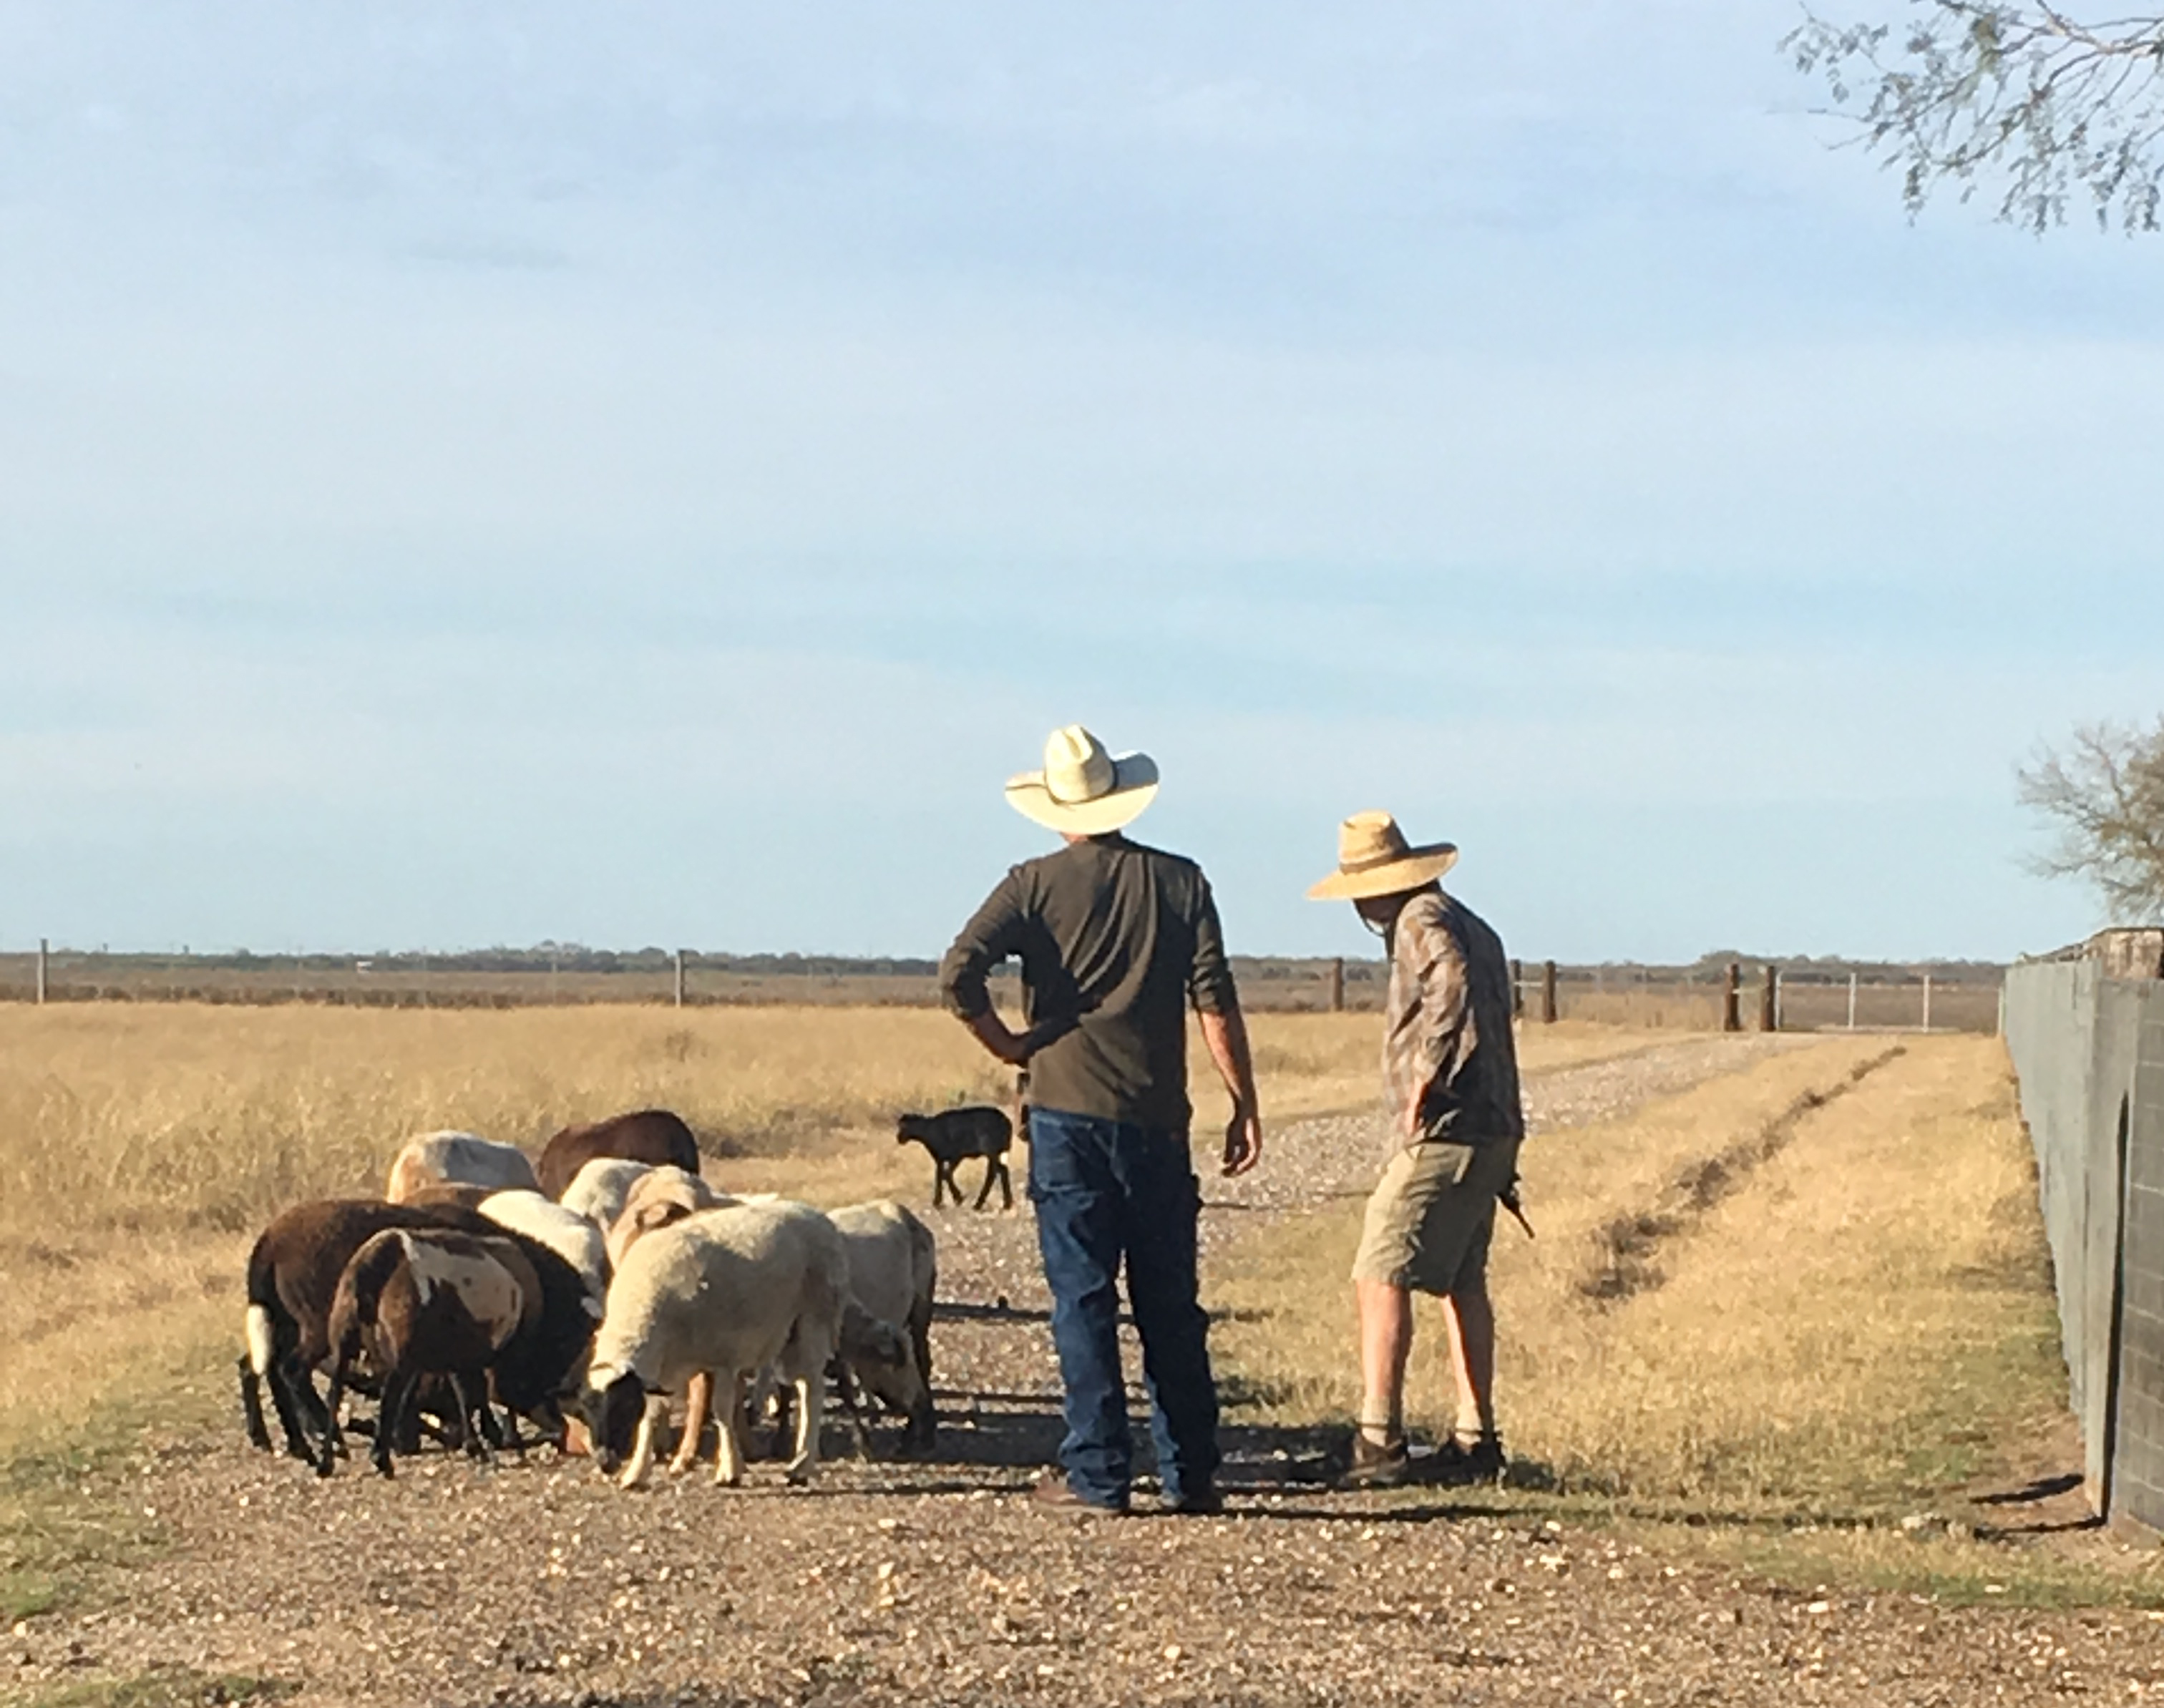 farmers observe livestock